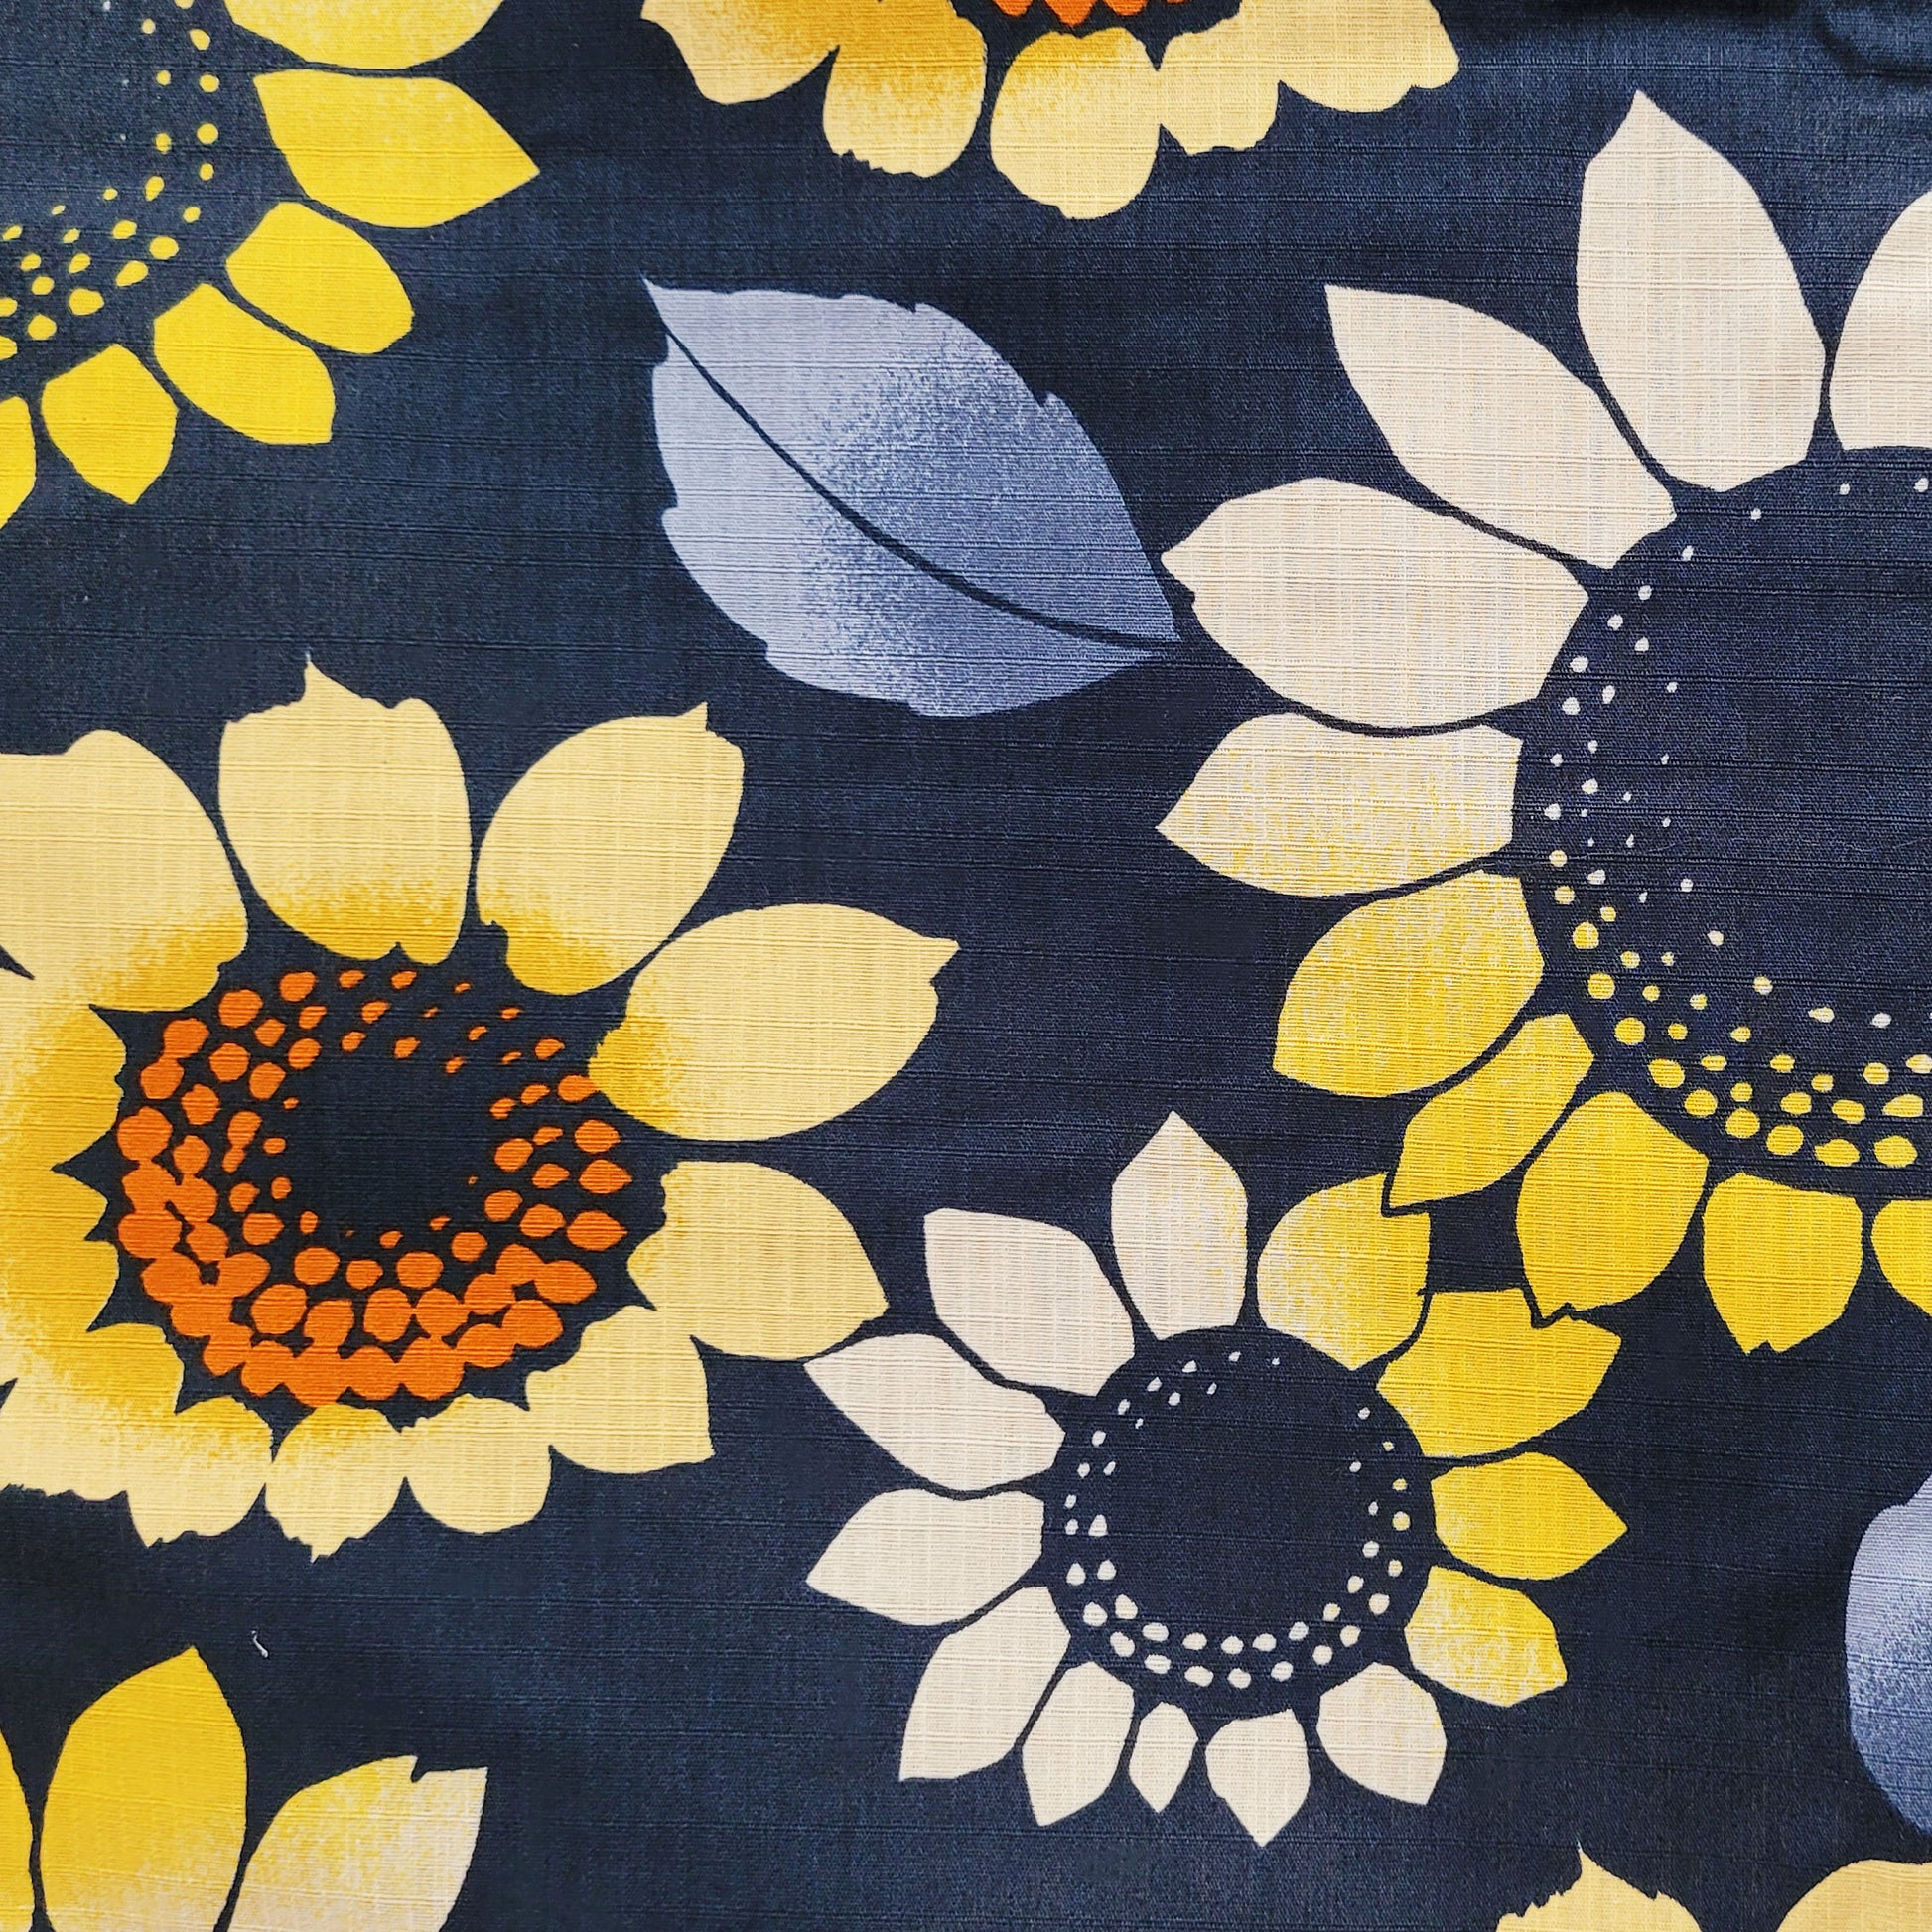 Japanese Yukata Kimono - Sunflowers in Indigo Blue